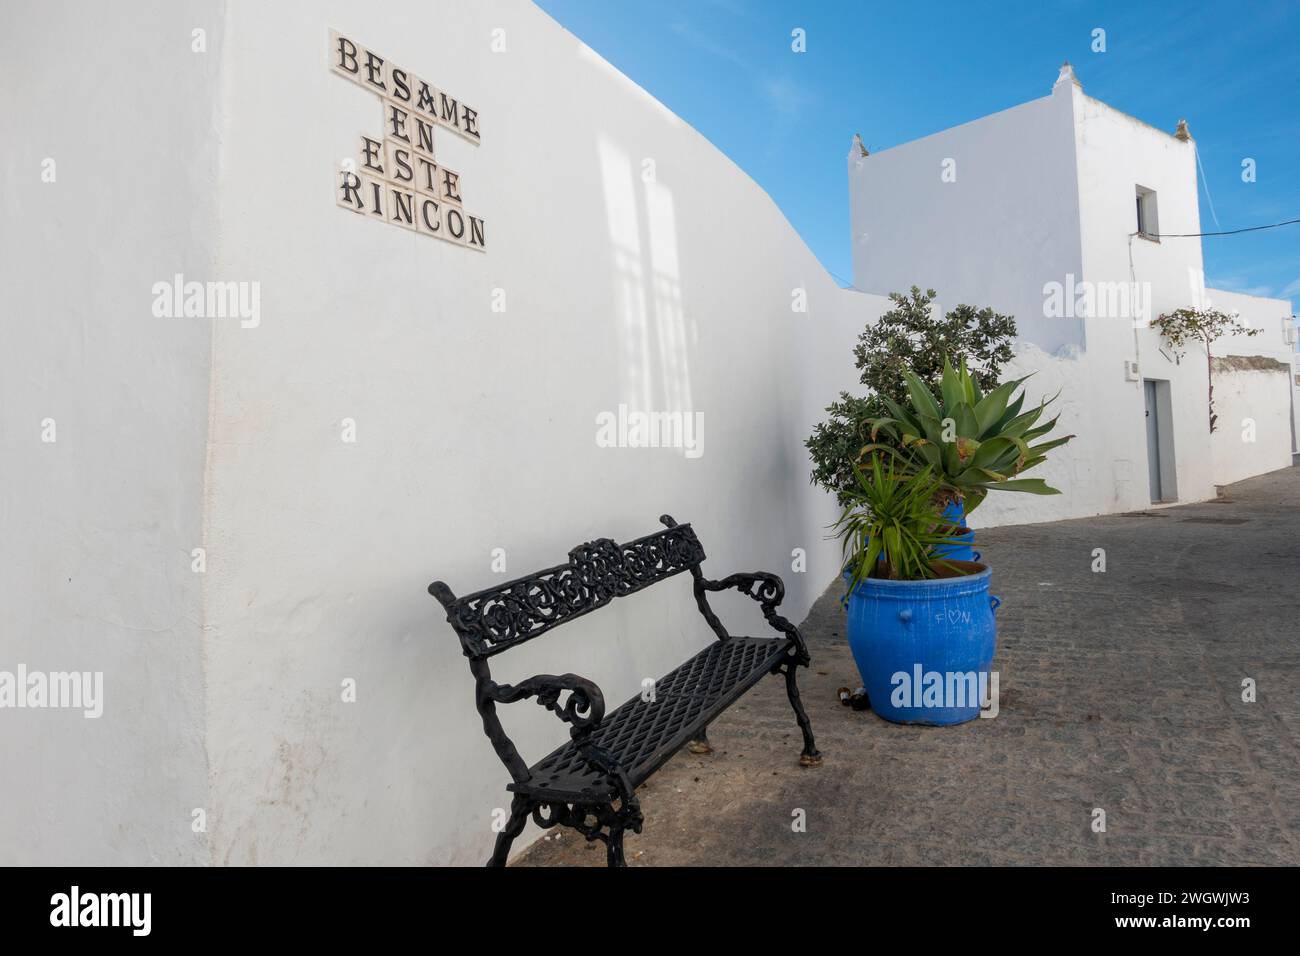 Nice corner located on a street in Vejer de la Frontera, called Besame En Este Rincon (Kiss Me In This Corner). Spanish culture, Stock Photo